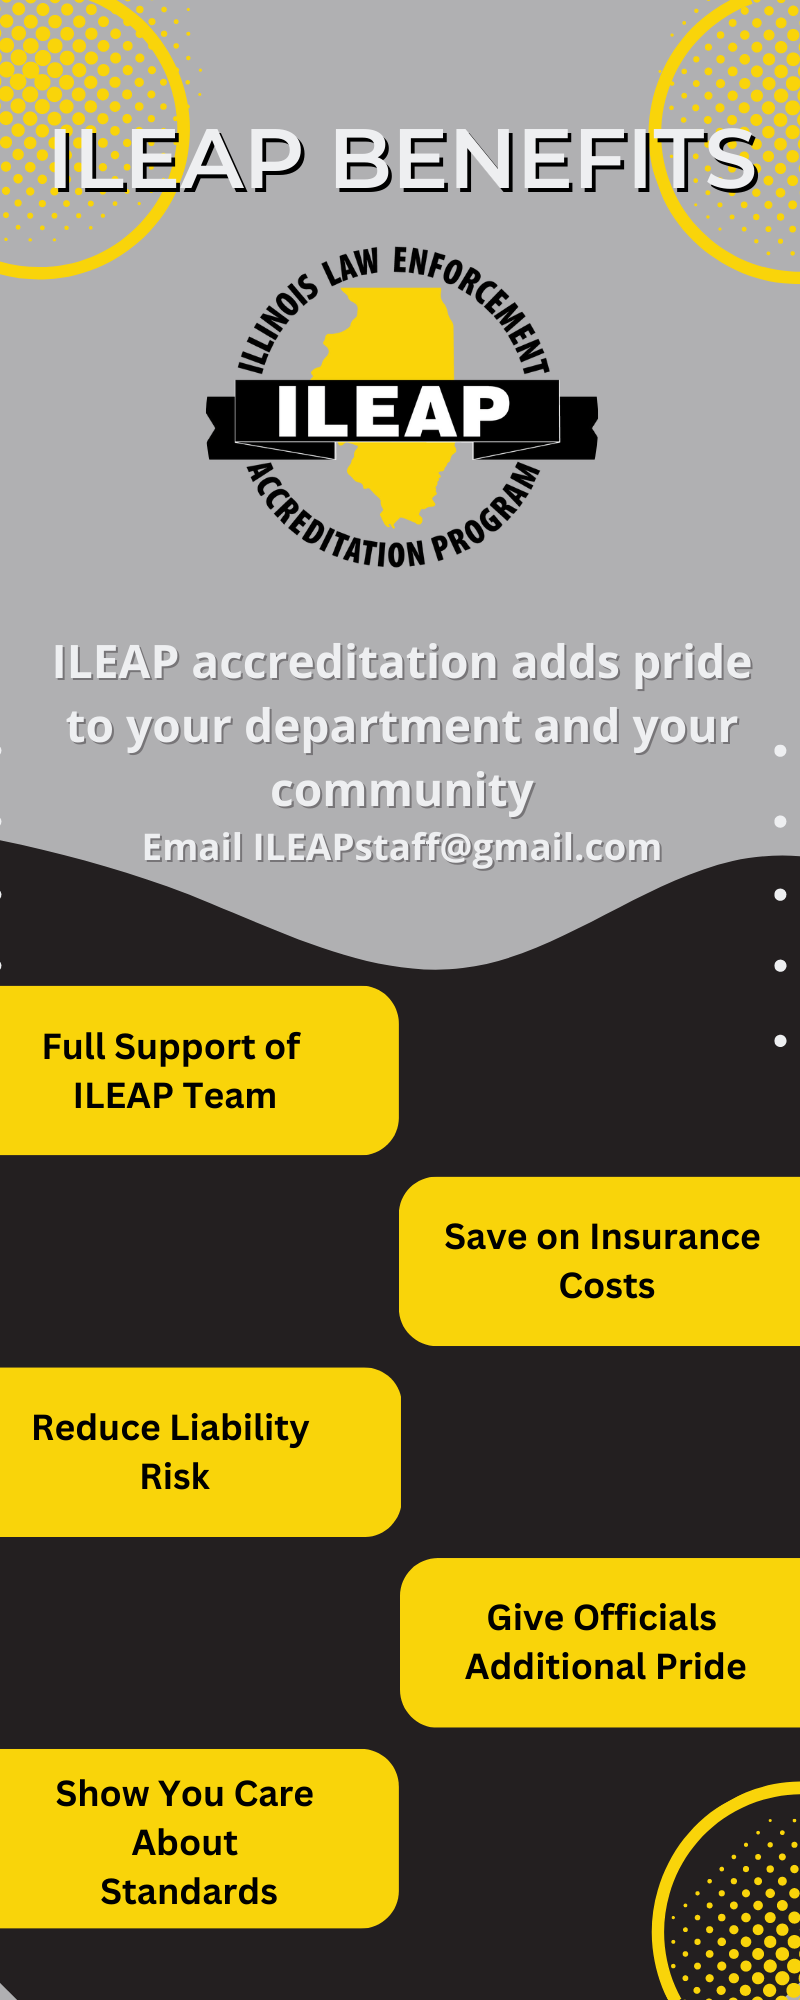 ILEAP Infographic on Benefits